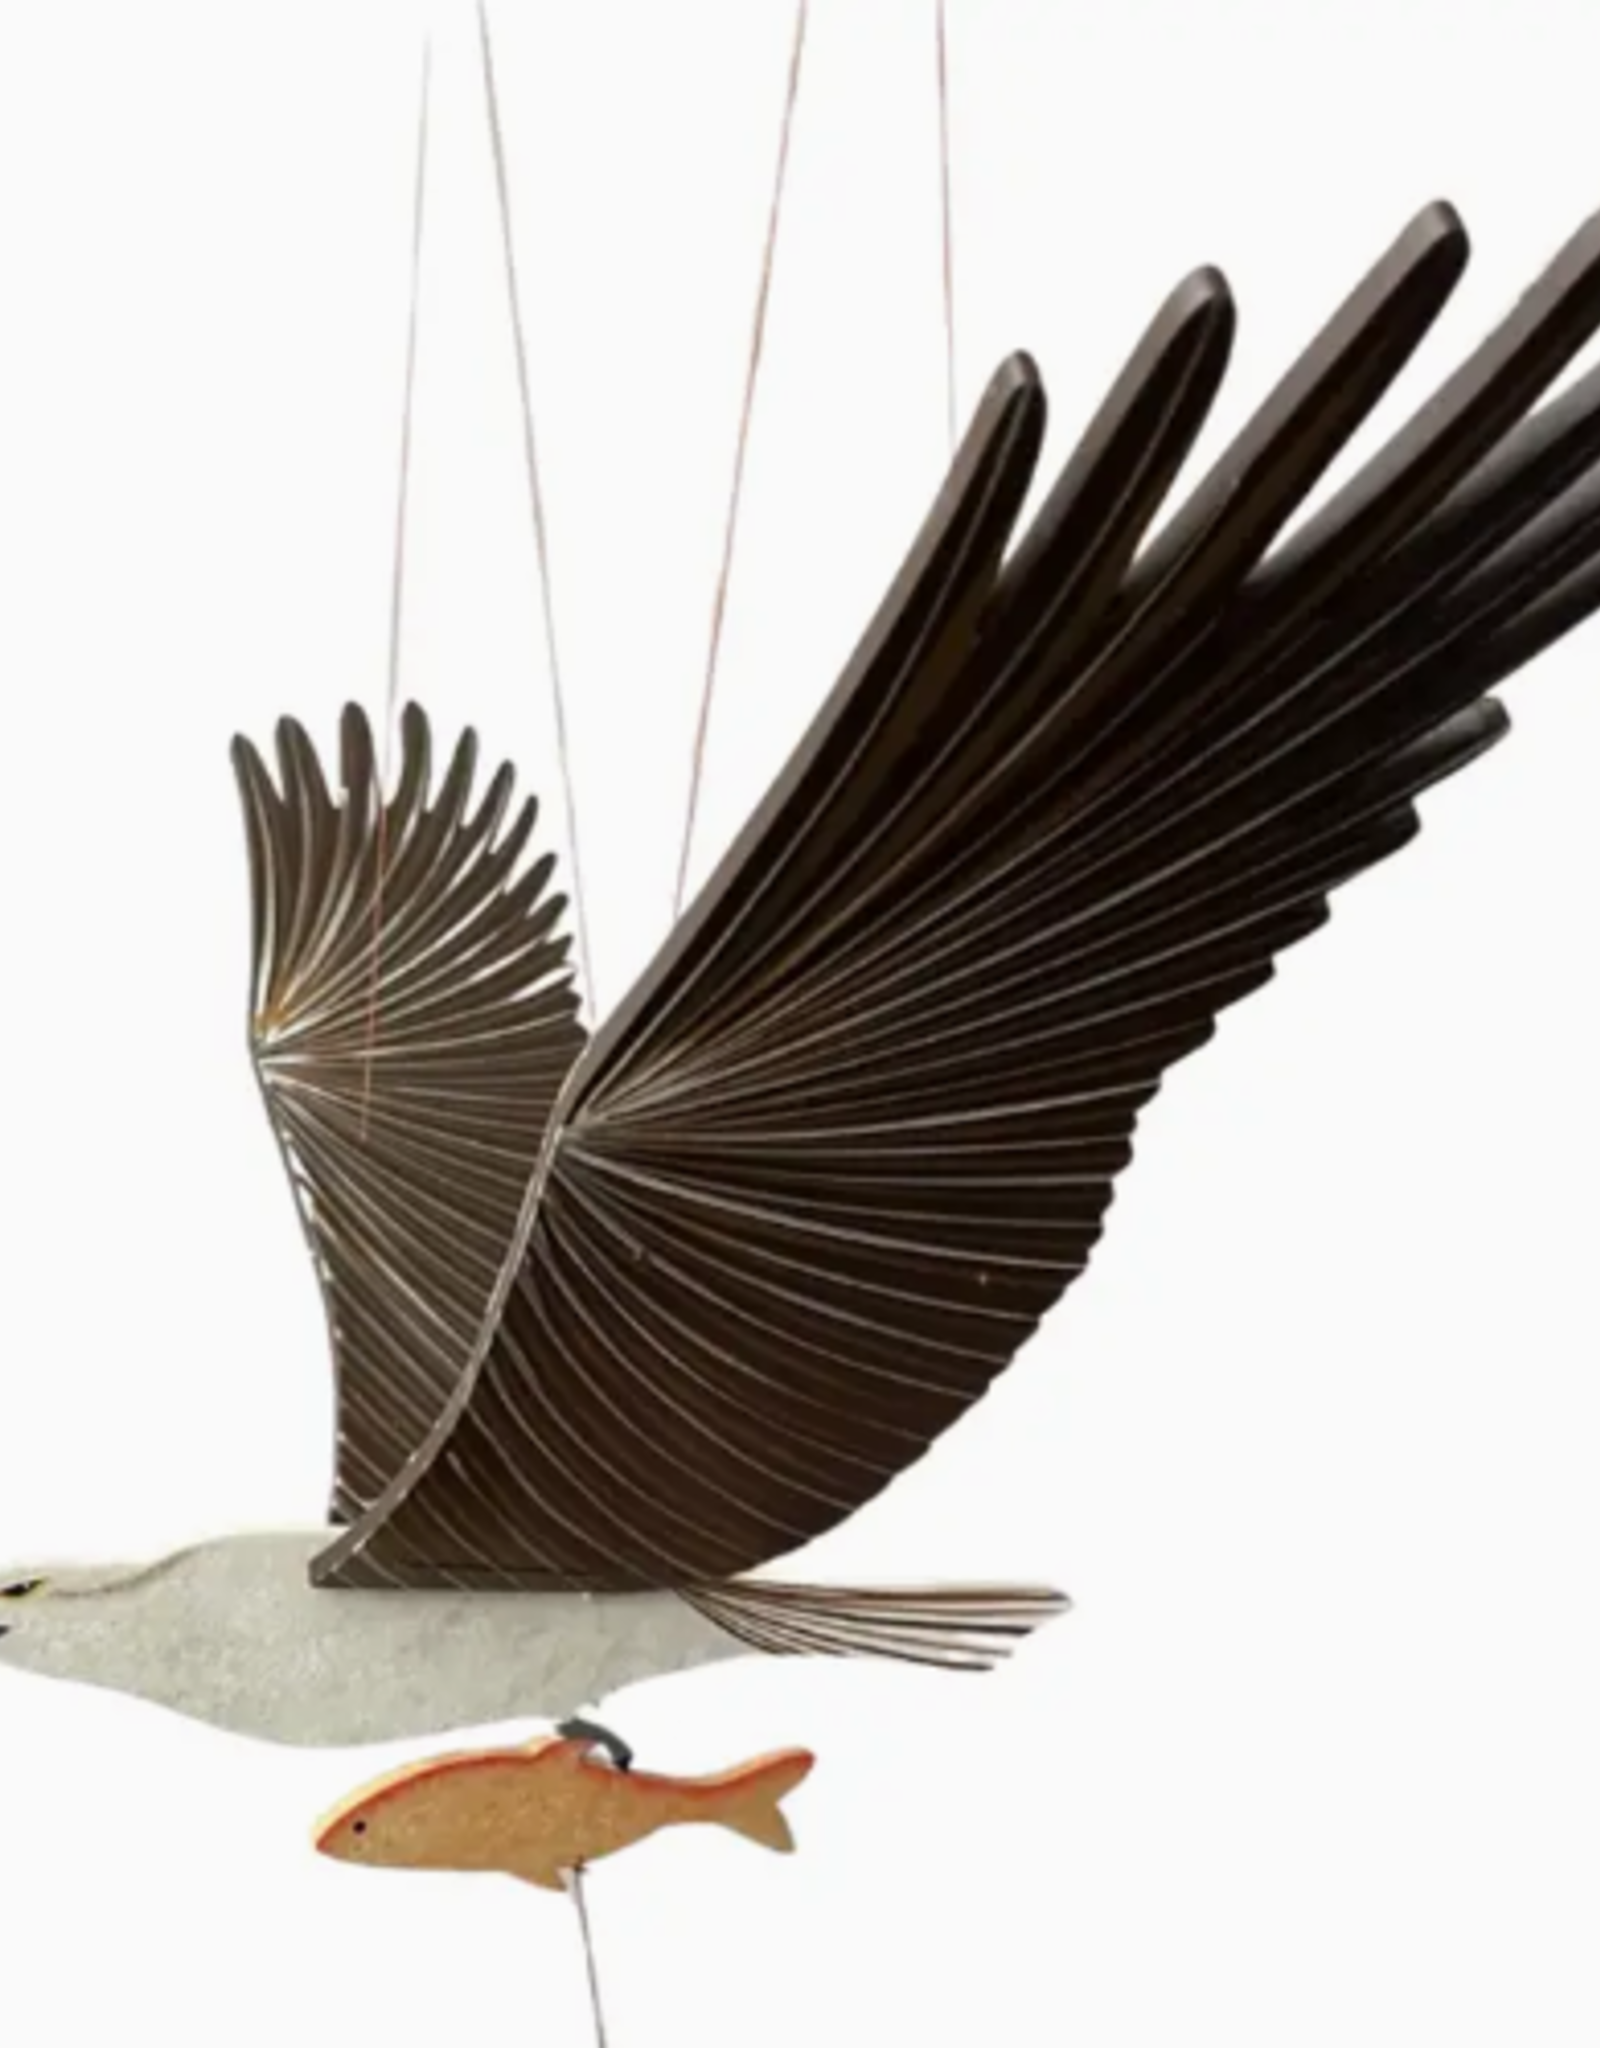 Tulia Artisans Osprey Flying Bird Mobile